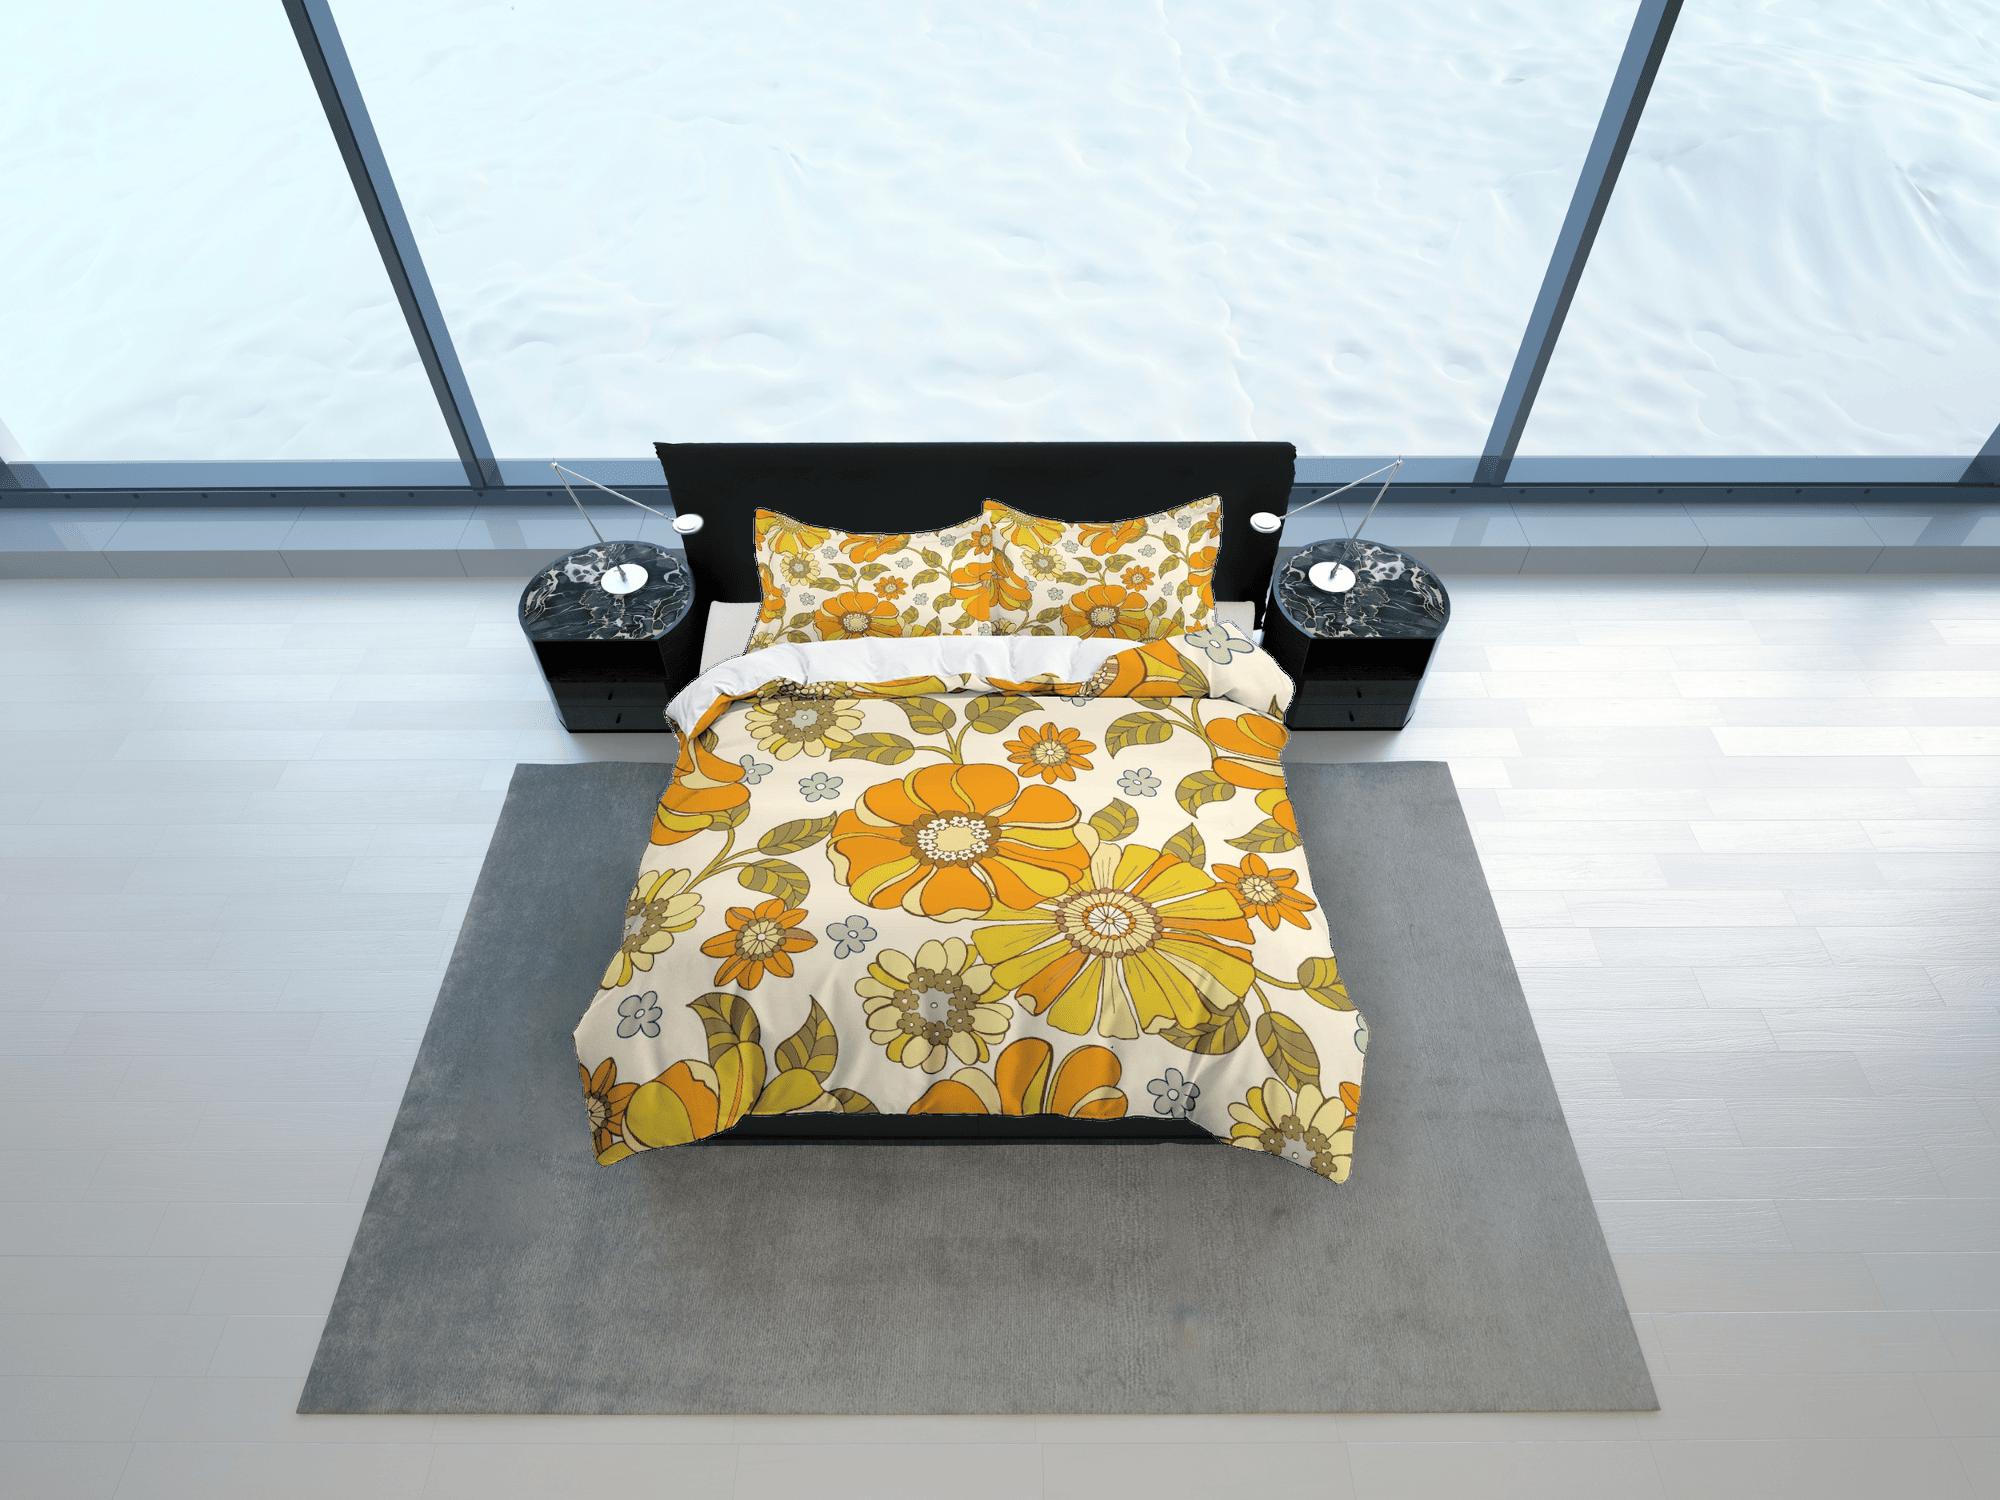 daintyduvet Mid century modern bedding orange floral duvet cover colorful retro bedding, vintage style boho maximalist bedspread aesthetic bedding daisy